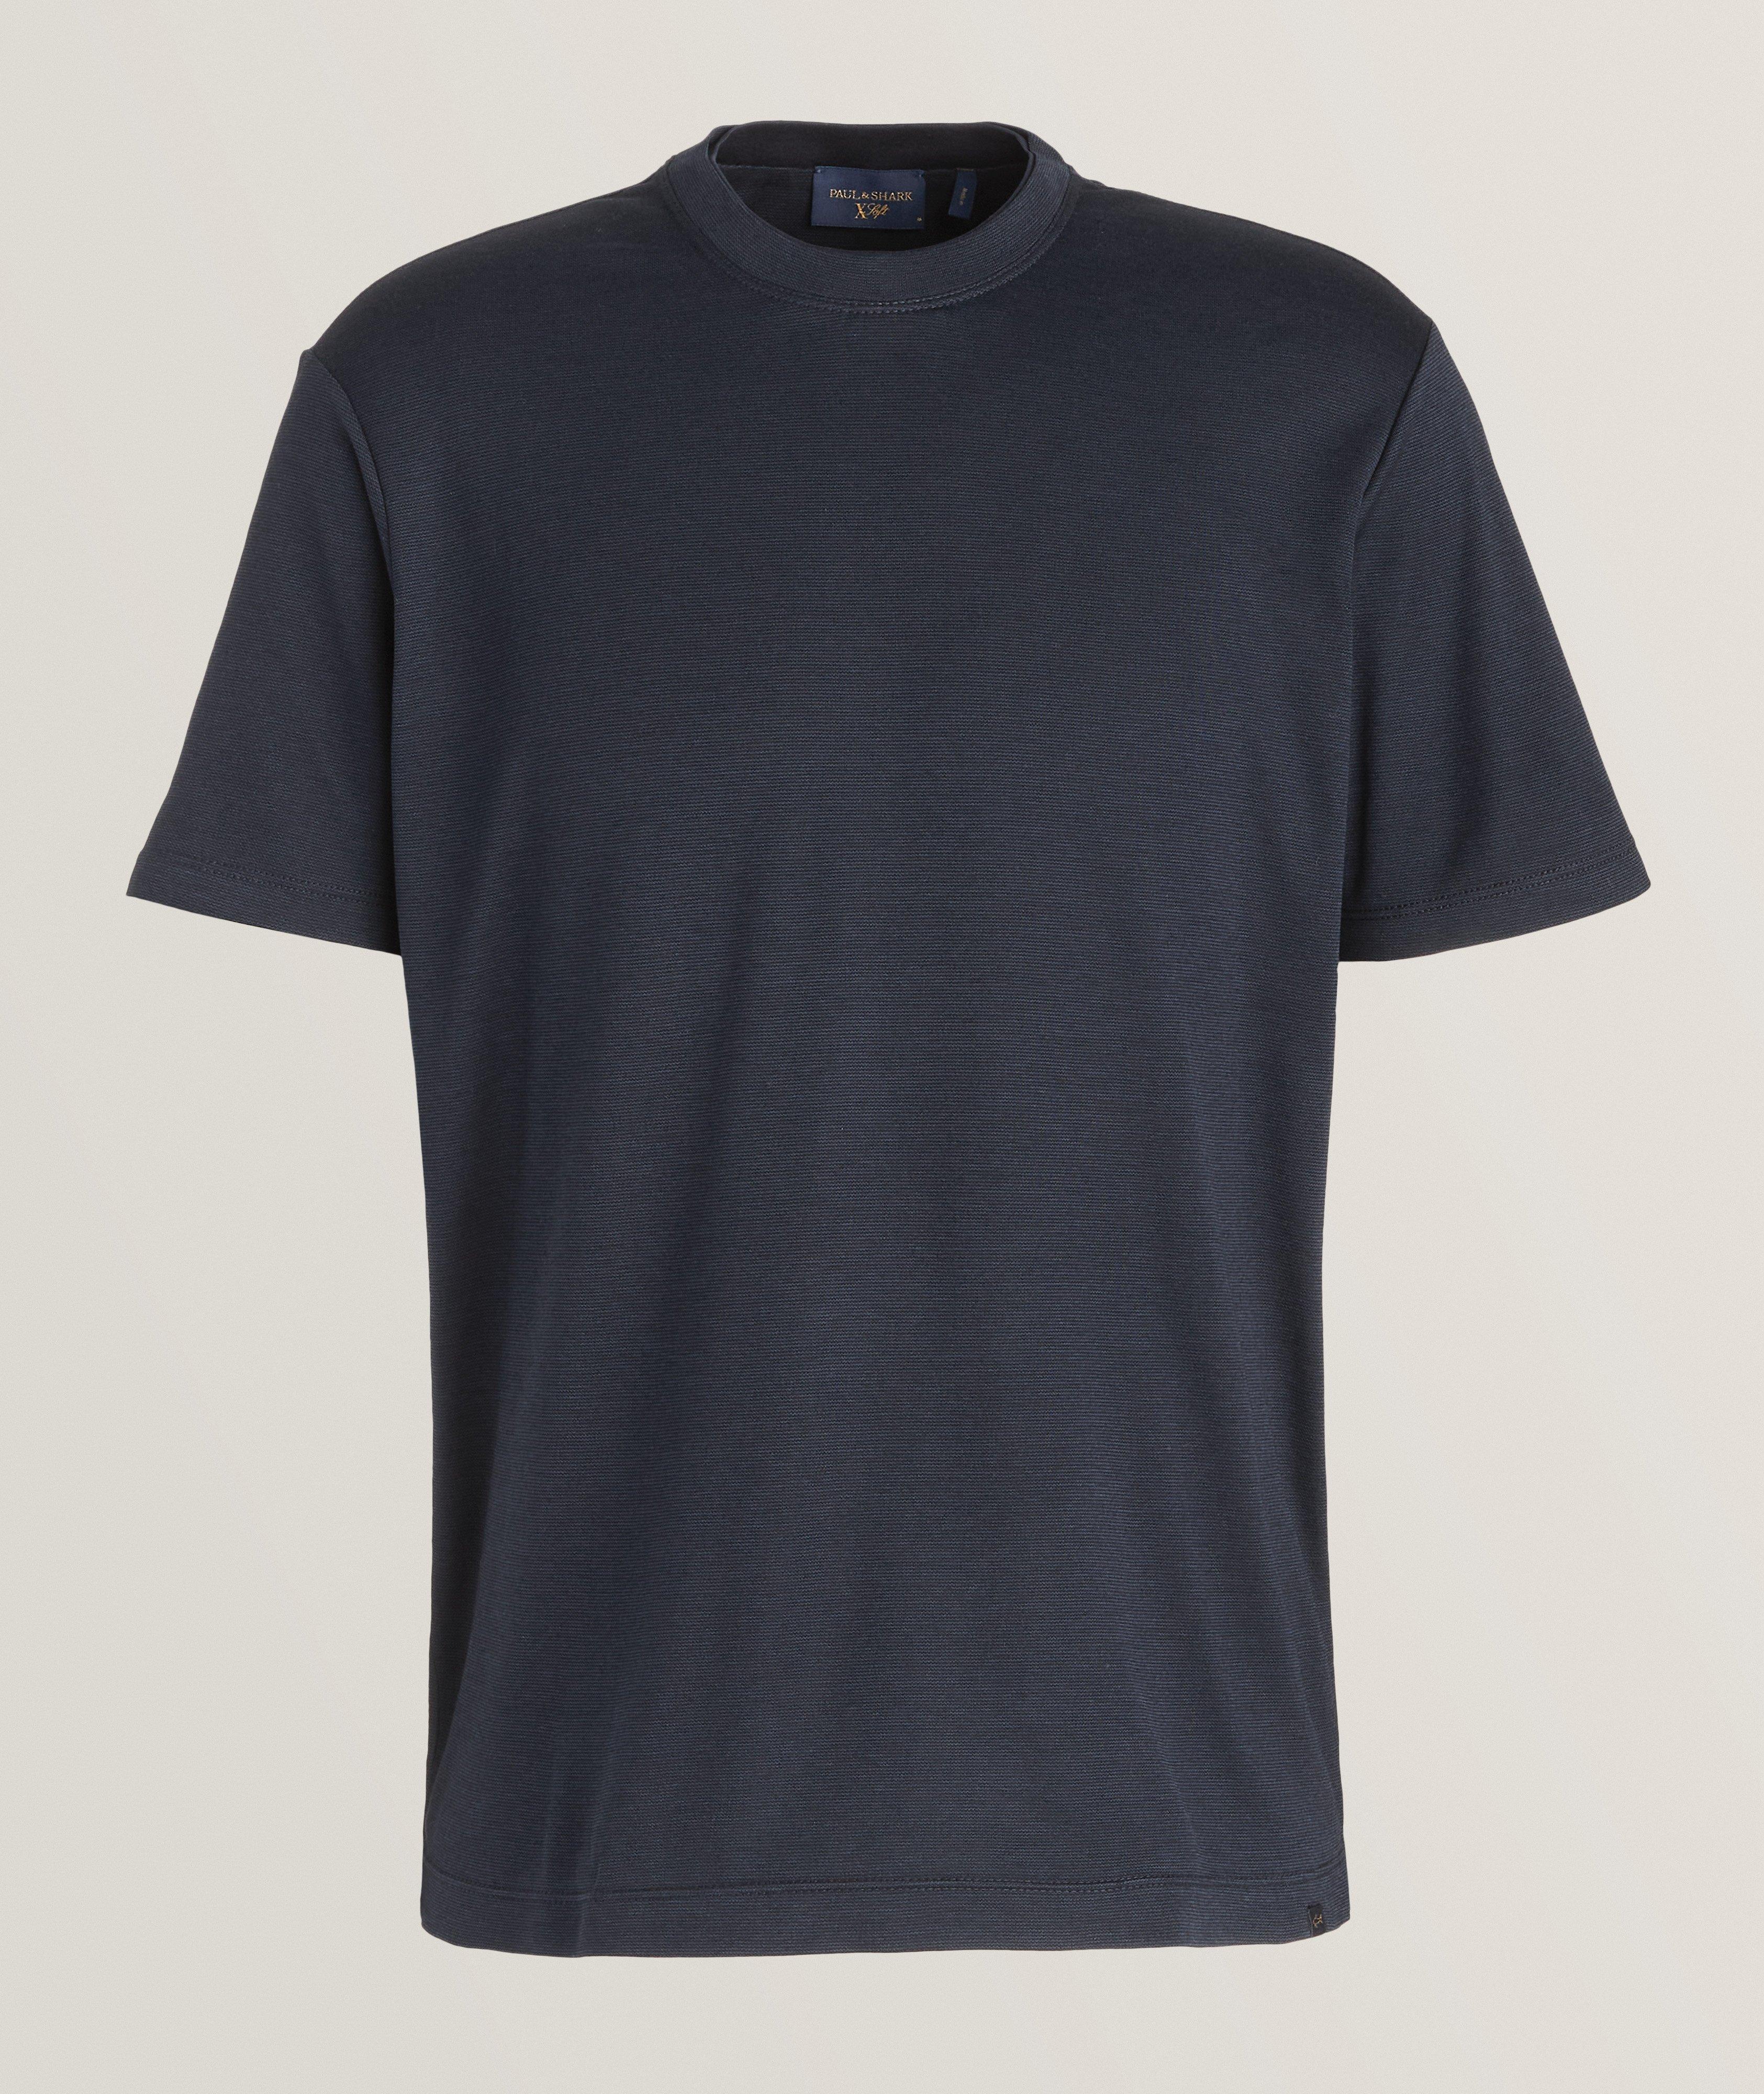 Aqua Cotton-Blend T-Shirt  image 0